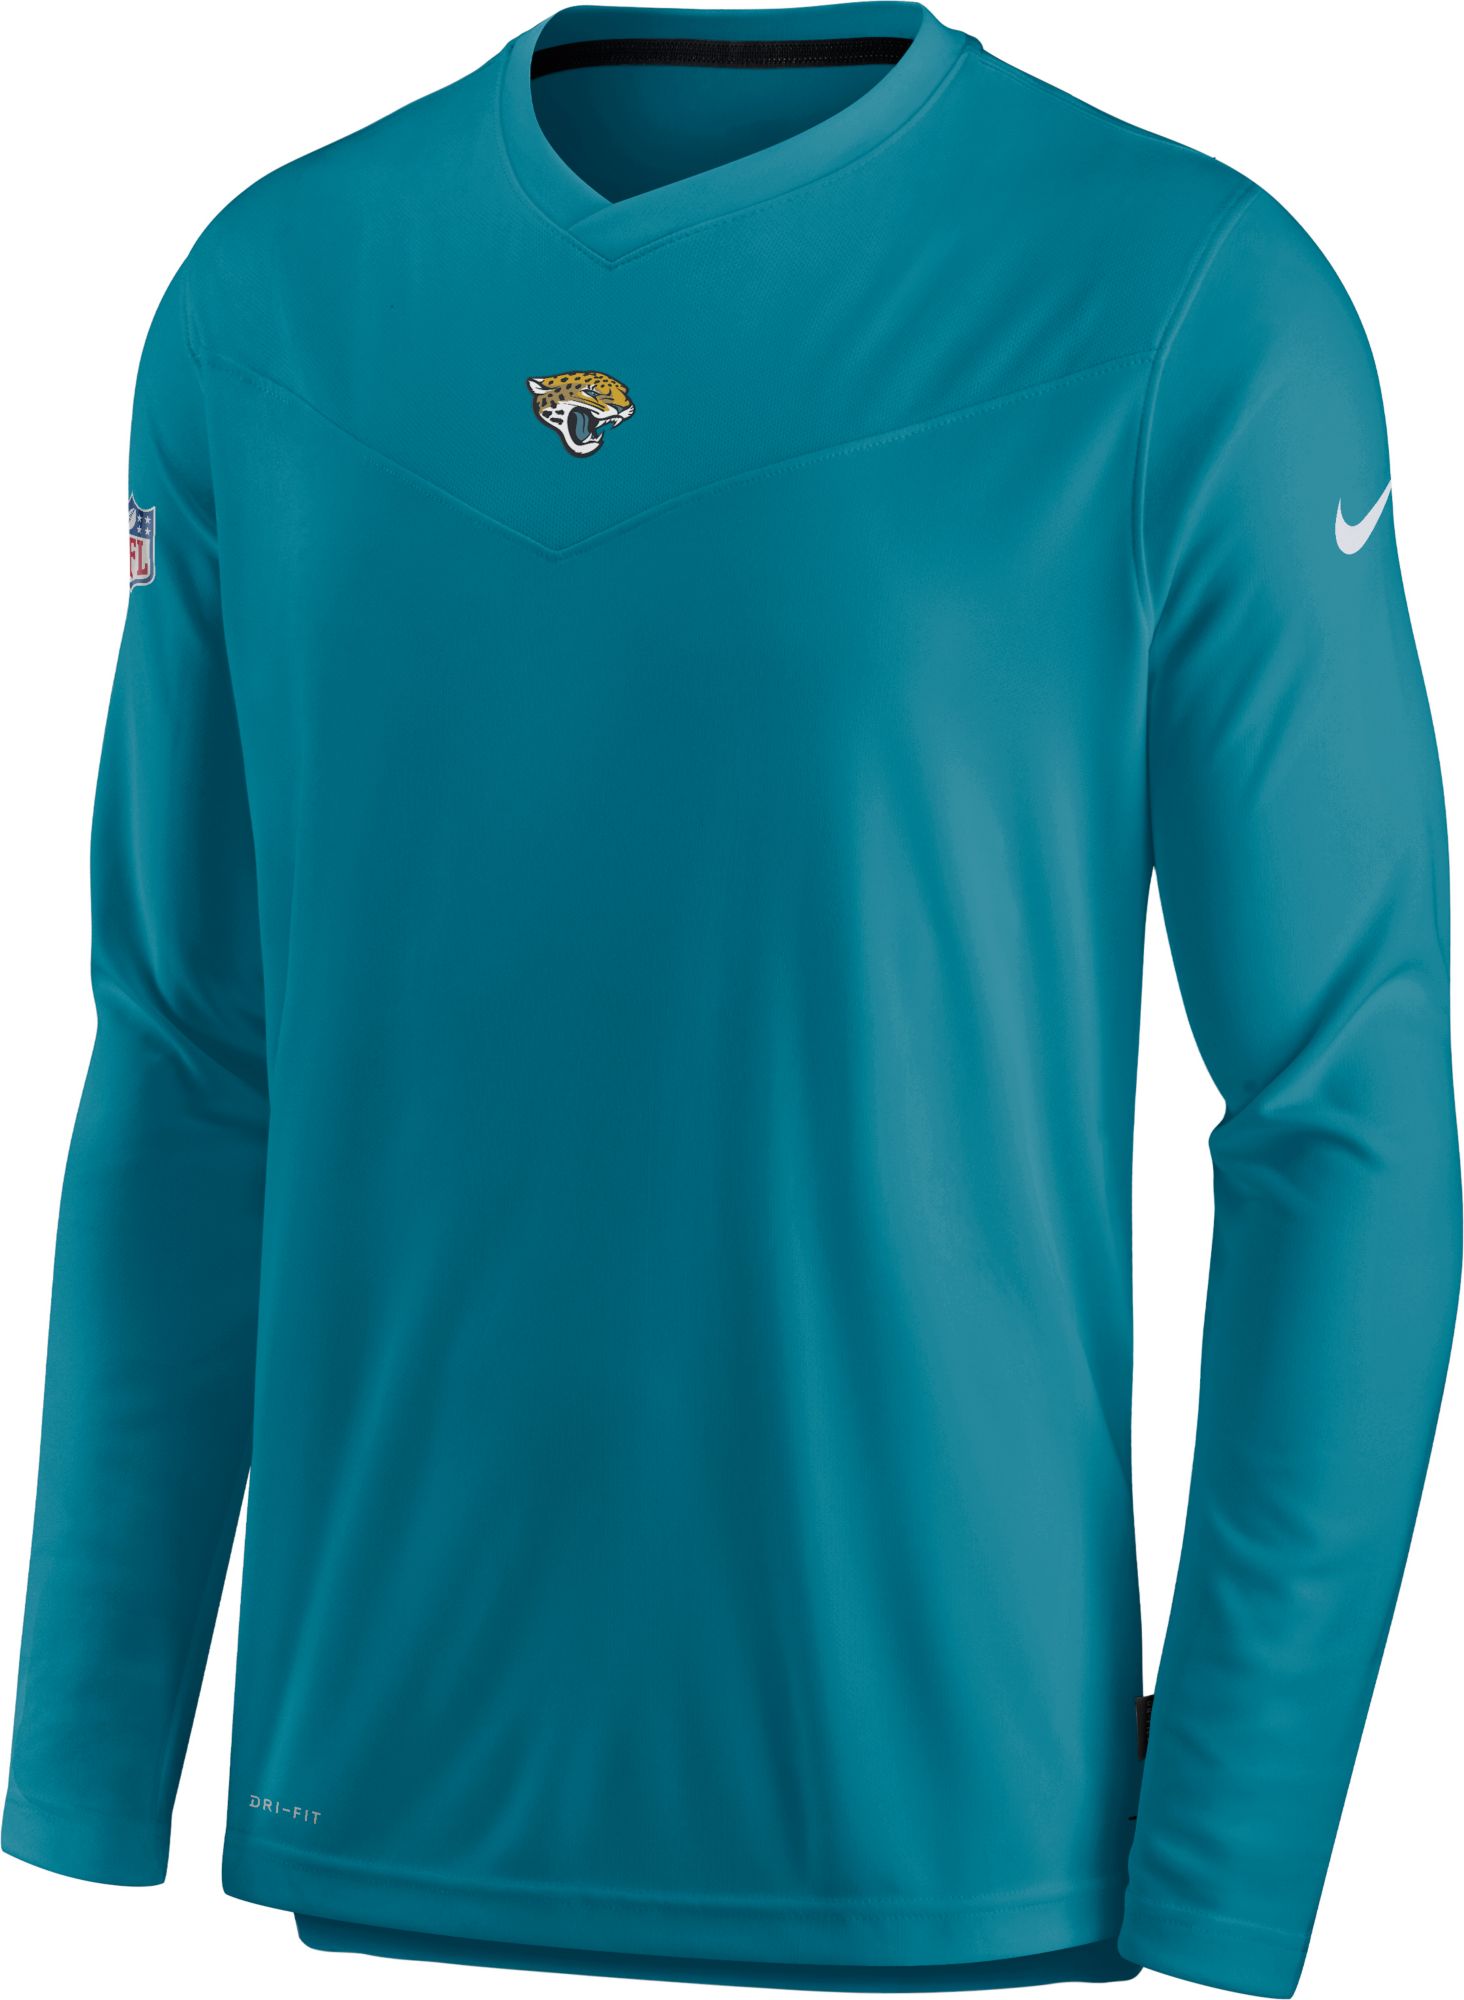 Nike / Men's Jacksonville Jaguars Sideline Coaches Teal Long Sleeve T-Shirt